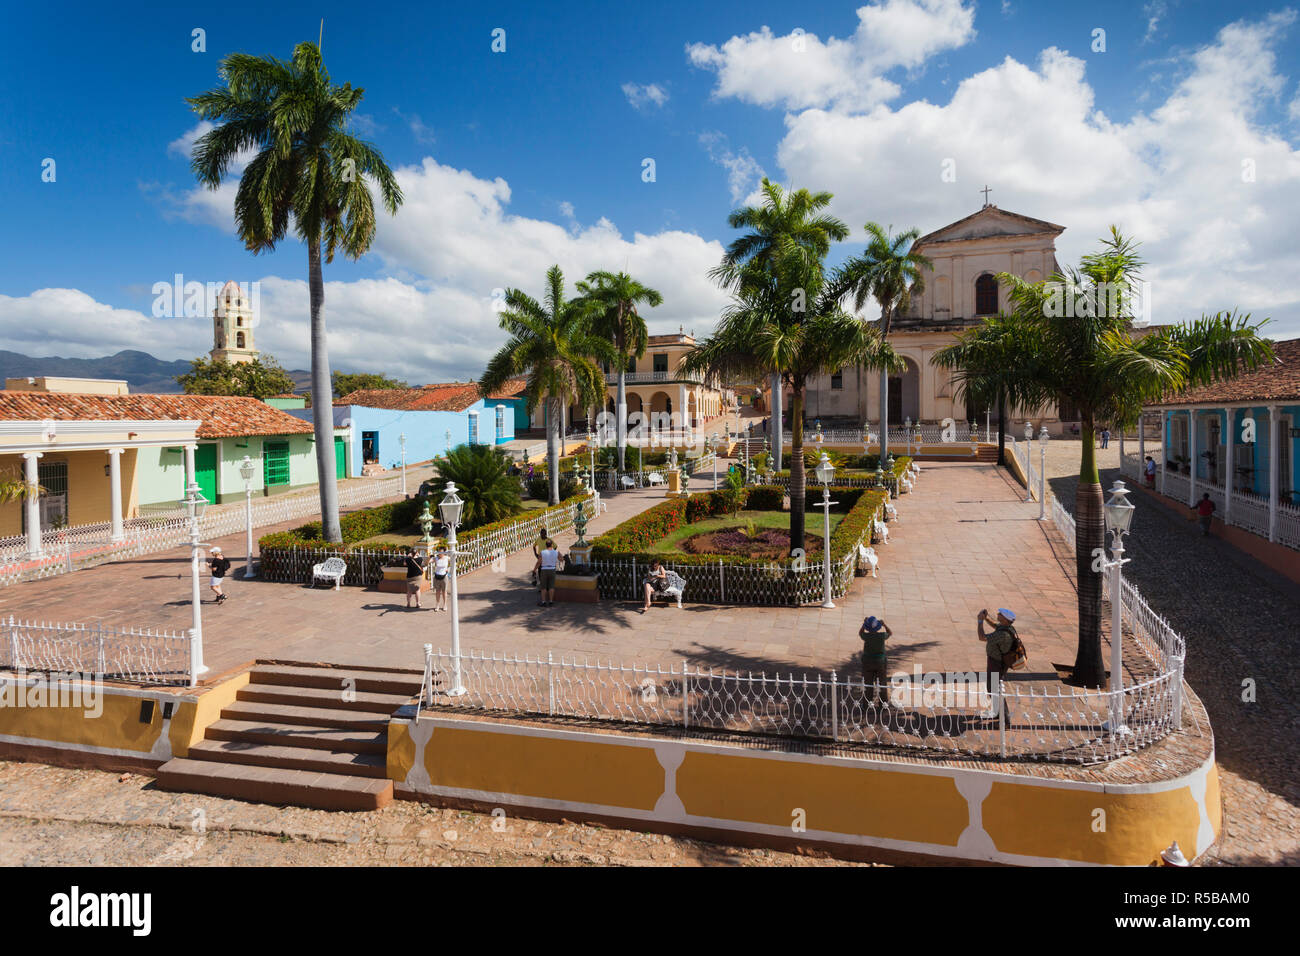 Cuba, Sancti Spiritus Province, Trinidad, Plaza Mayor Stock Photo